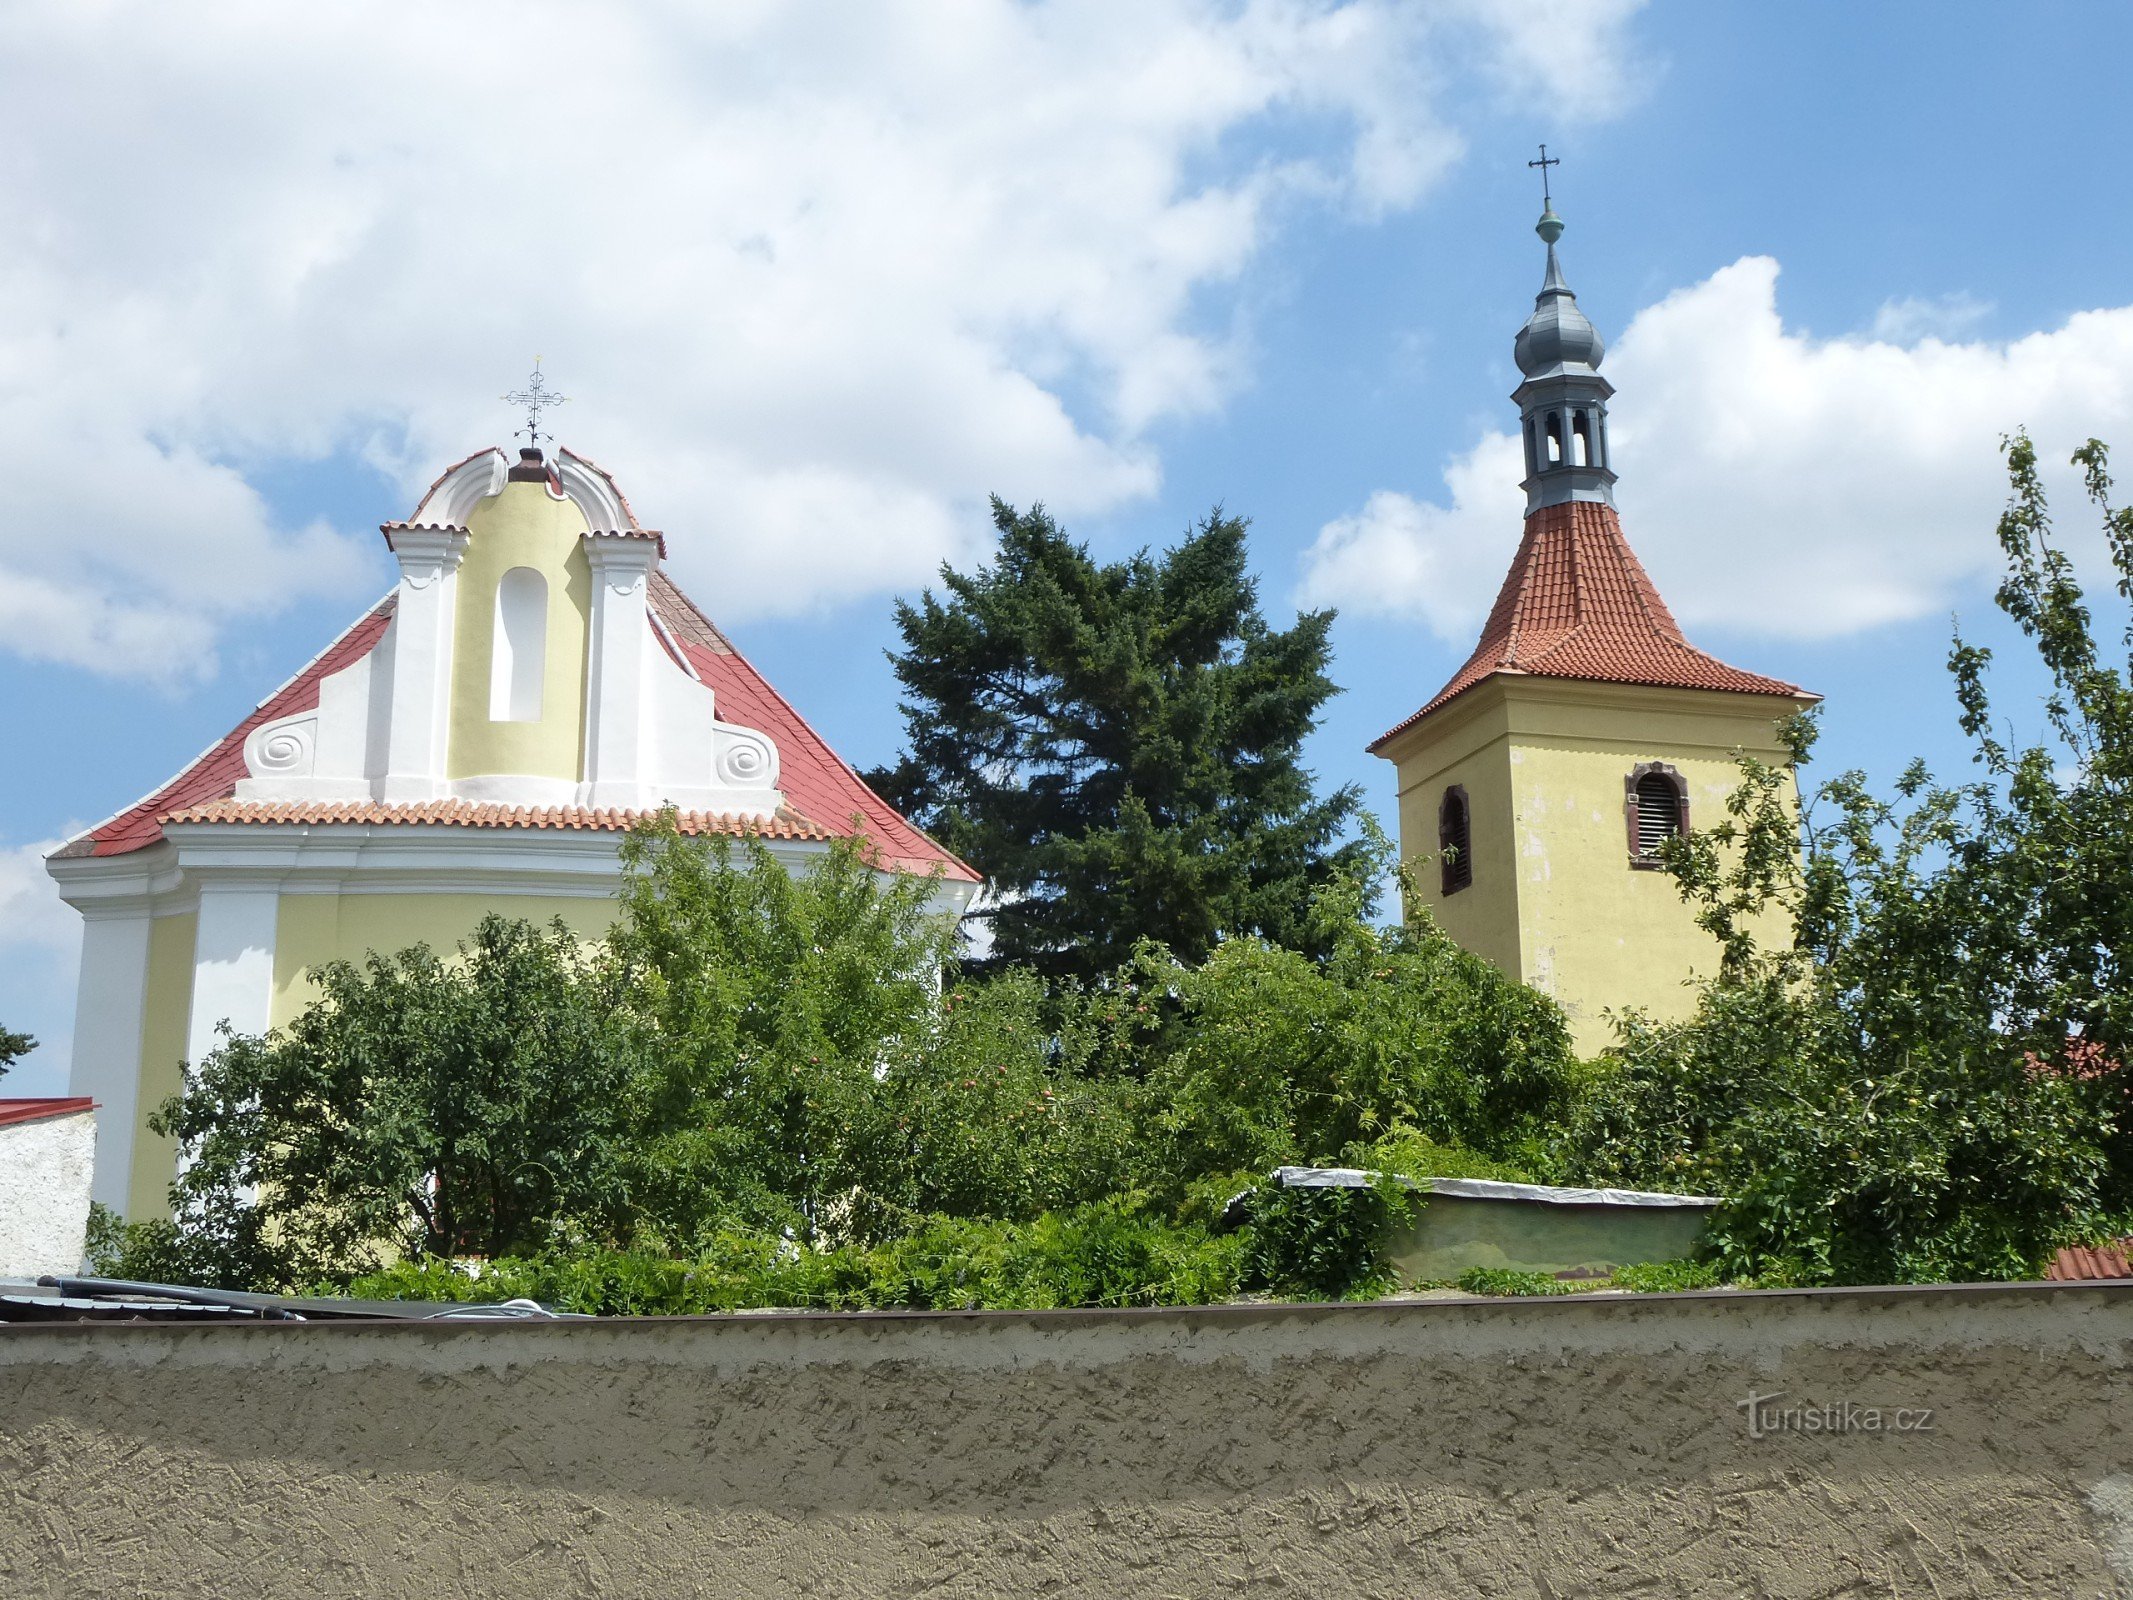 Nhà thờ St. John the Baptist trong Kostelec nad Černými lesy